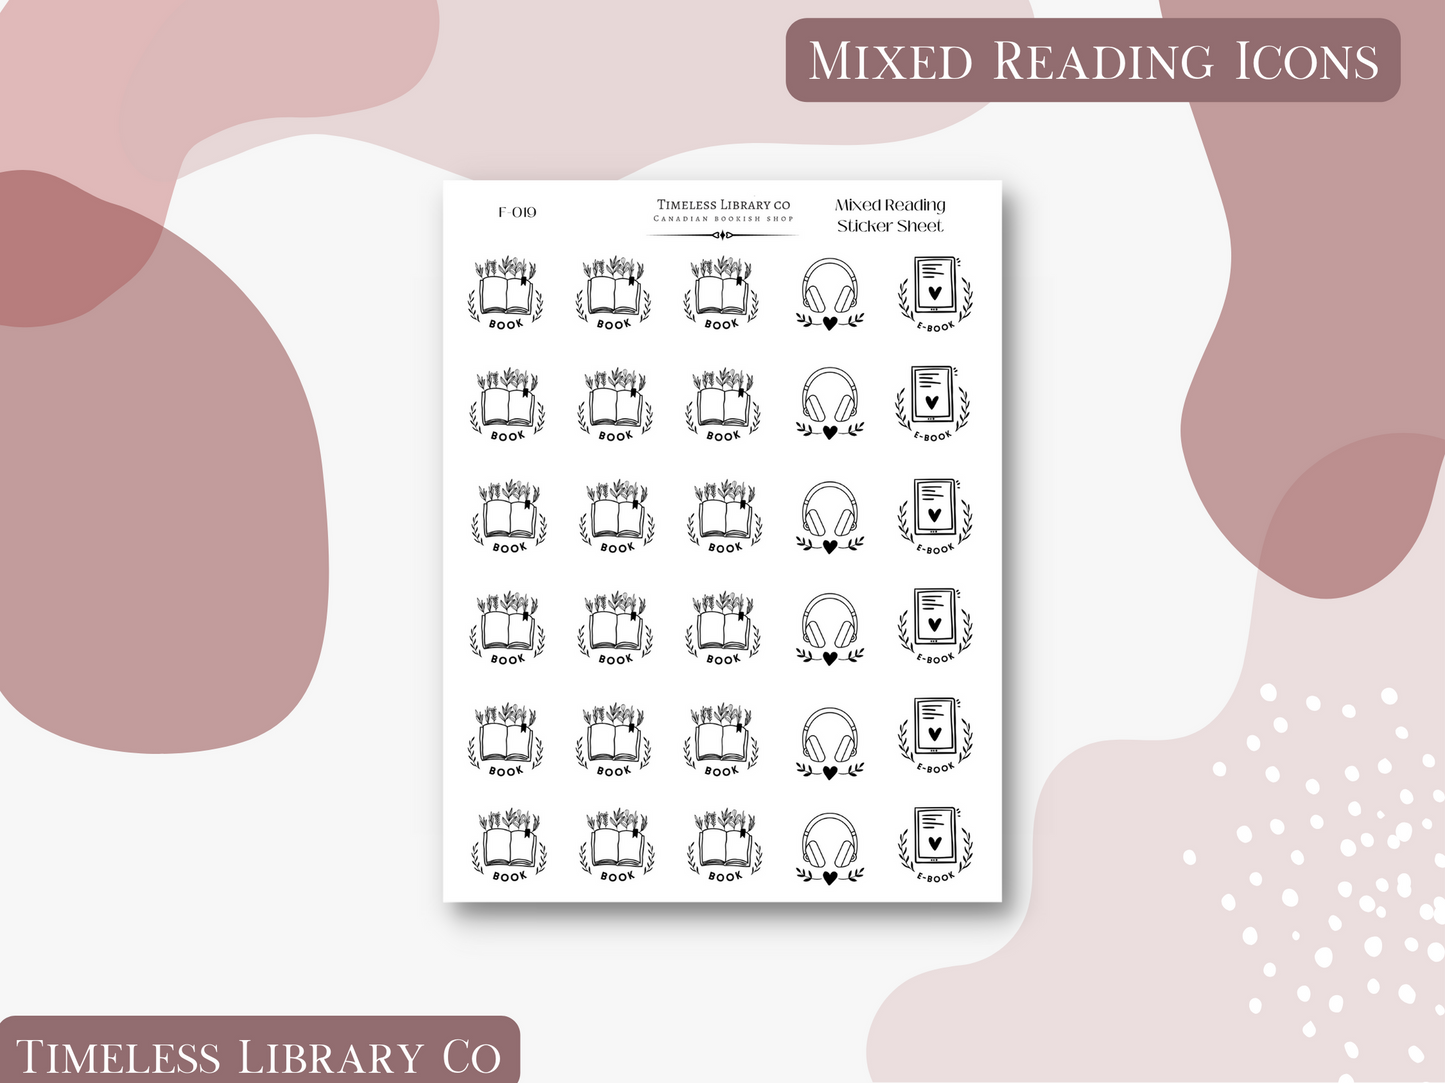 Mixed Reading Icons Sheet